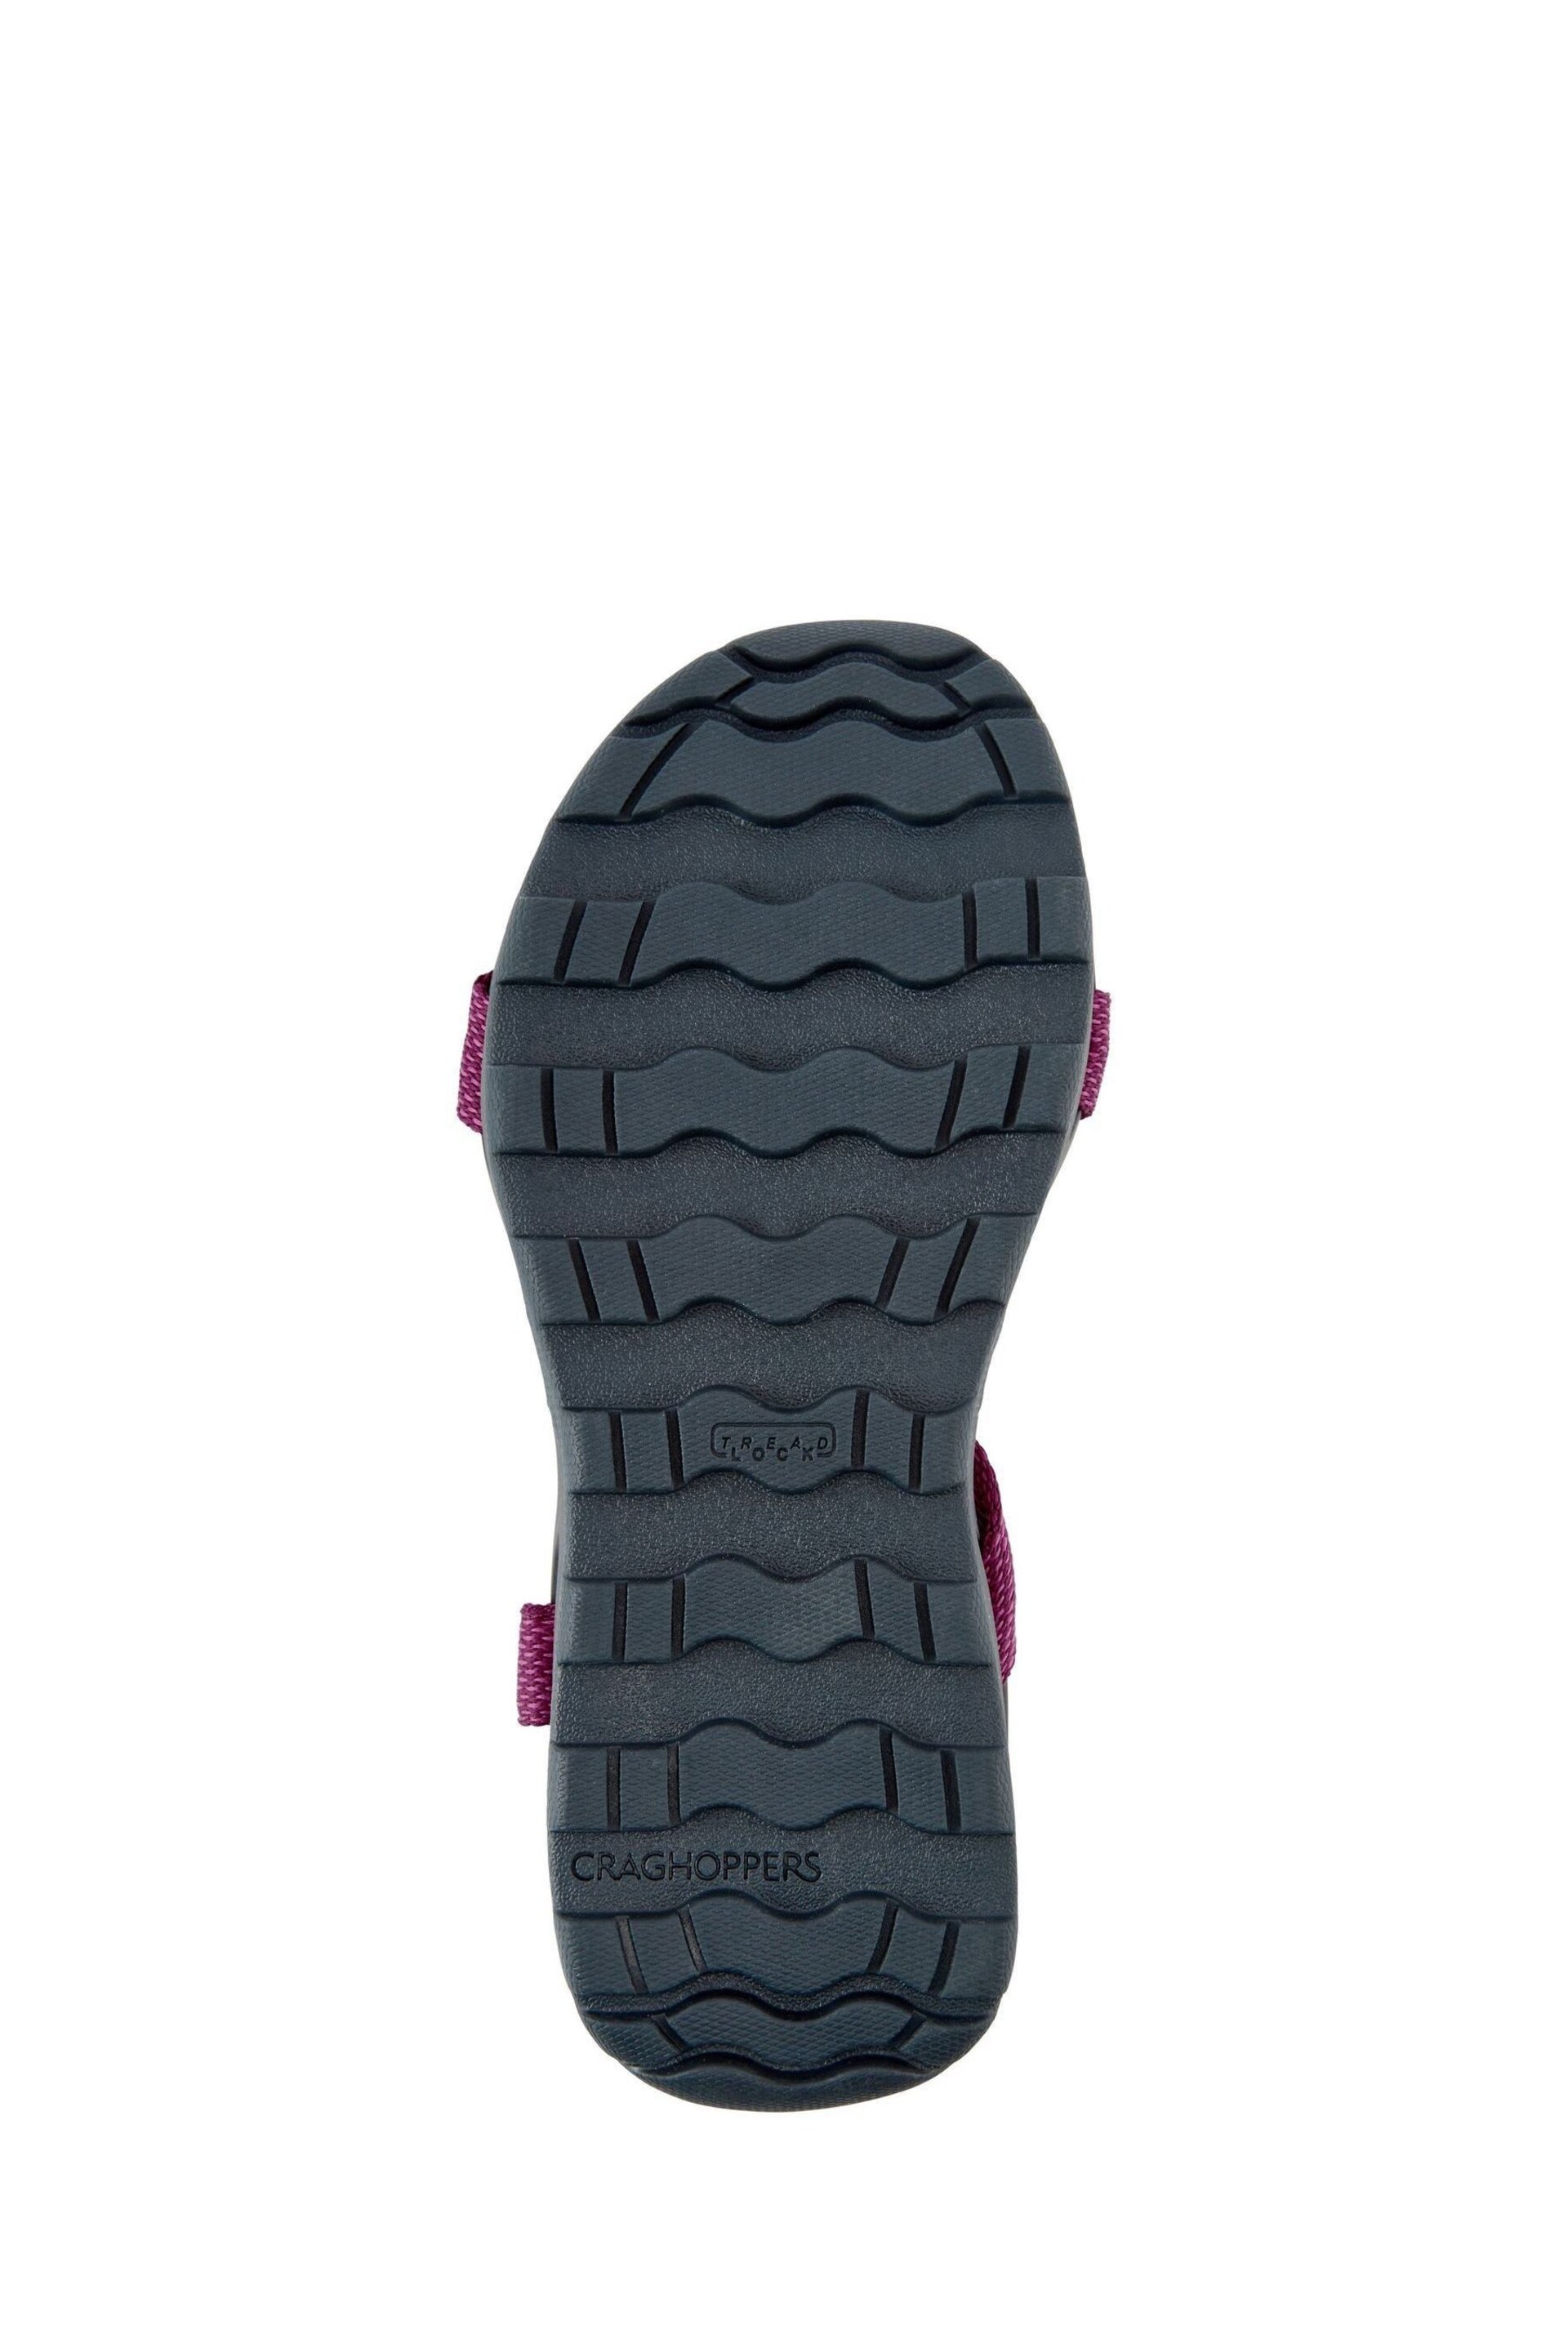 Craghoppers Pink/Purple Locke Sandals - Image 4 of 6